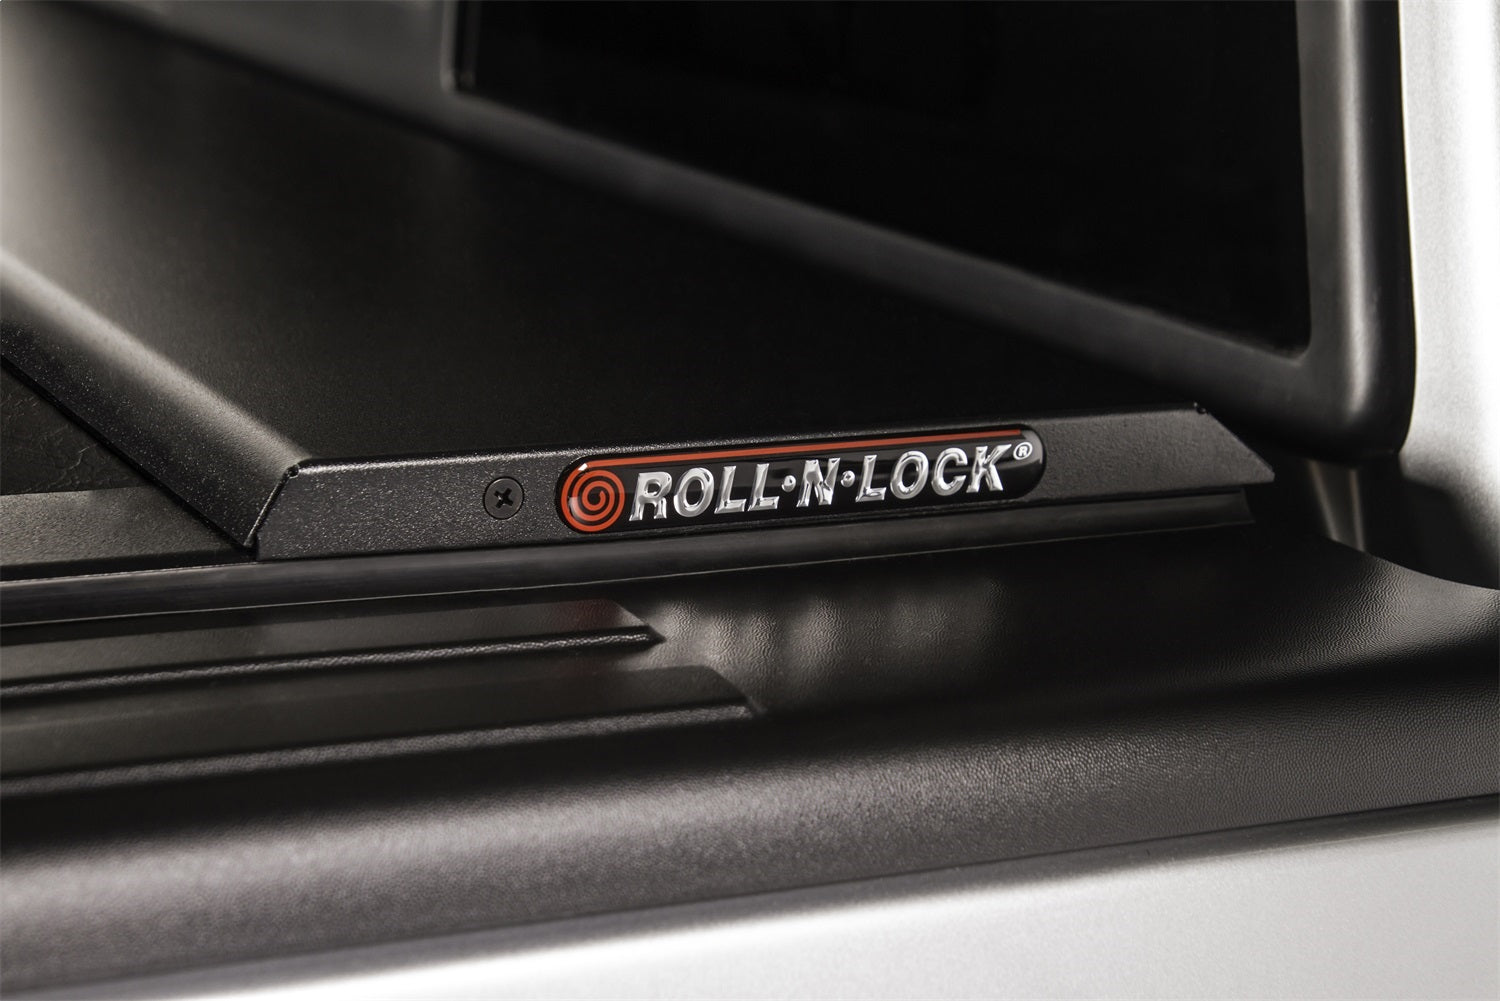 Roll-N-Lock LG531M Roll-N-Lock M-Series Truck Bed Cover Fits 16-22 Tacoma